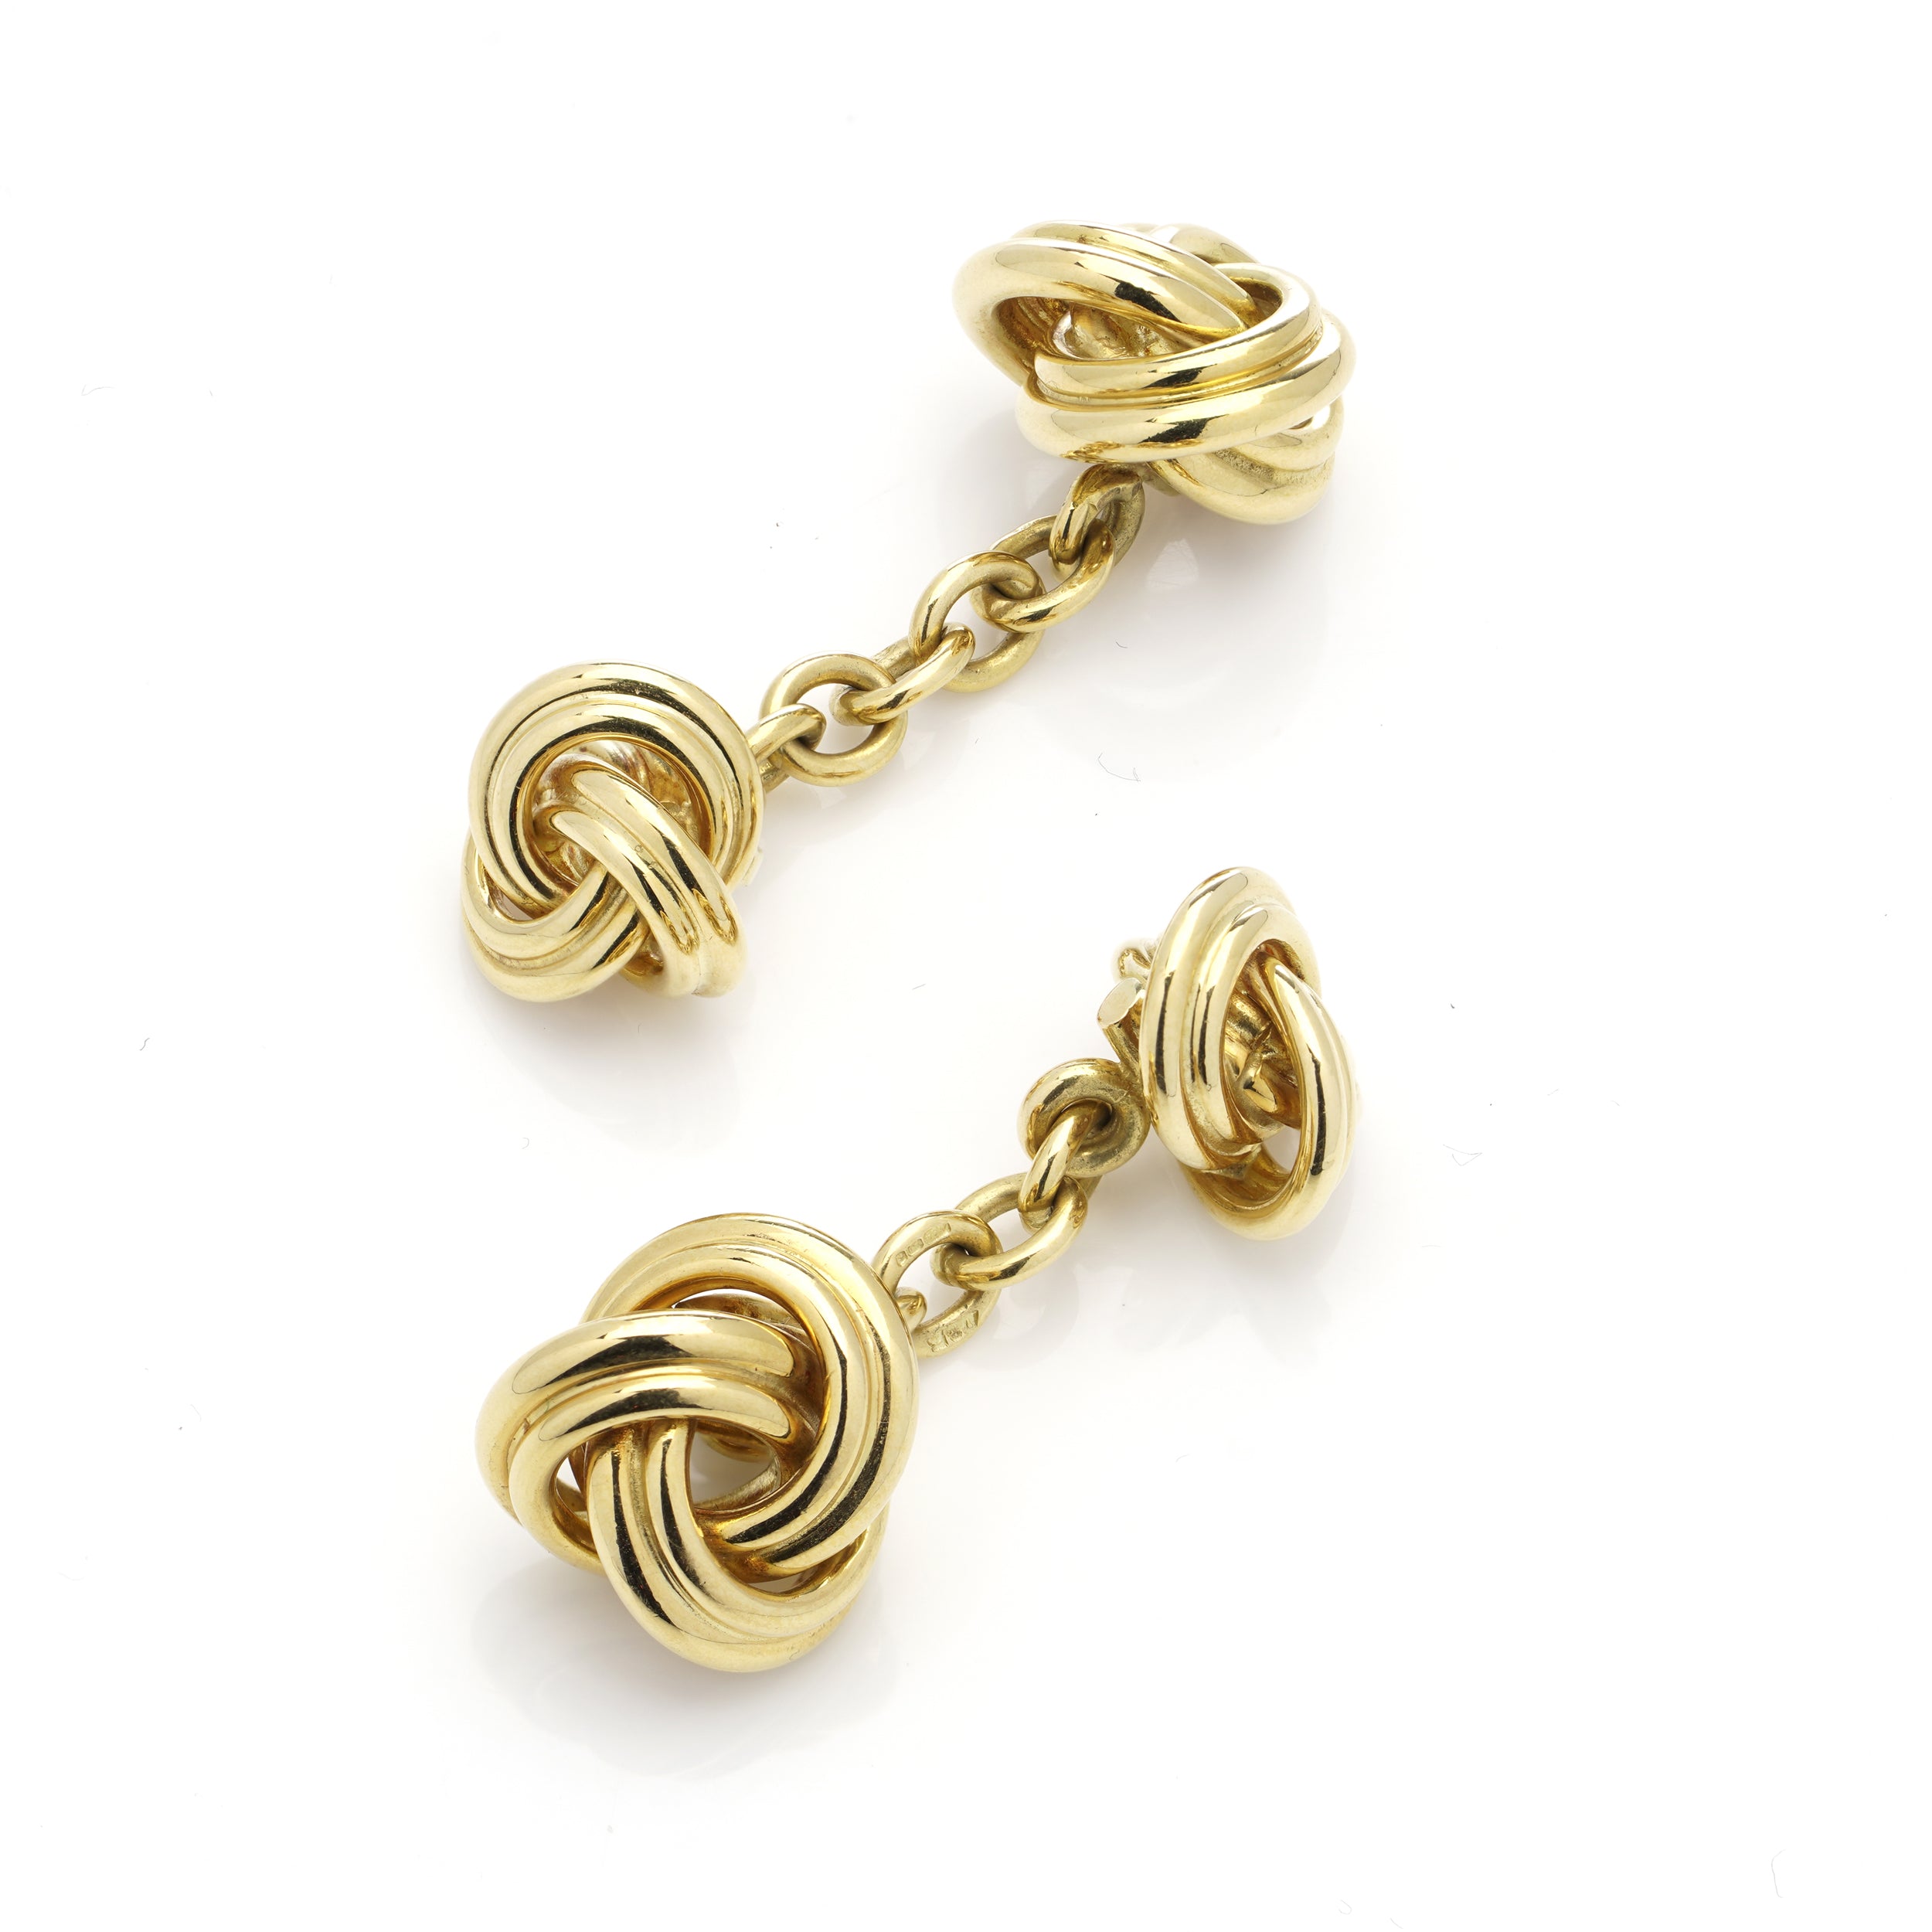 18ct Gold Knot Cufflinks by Deakin & Francis - Wildsmith Jewellery